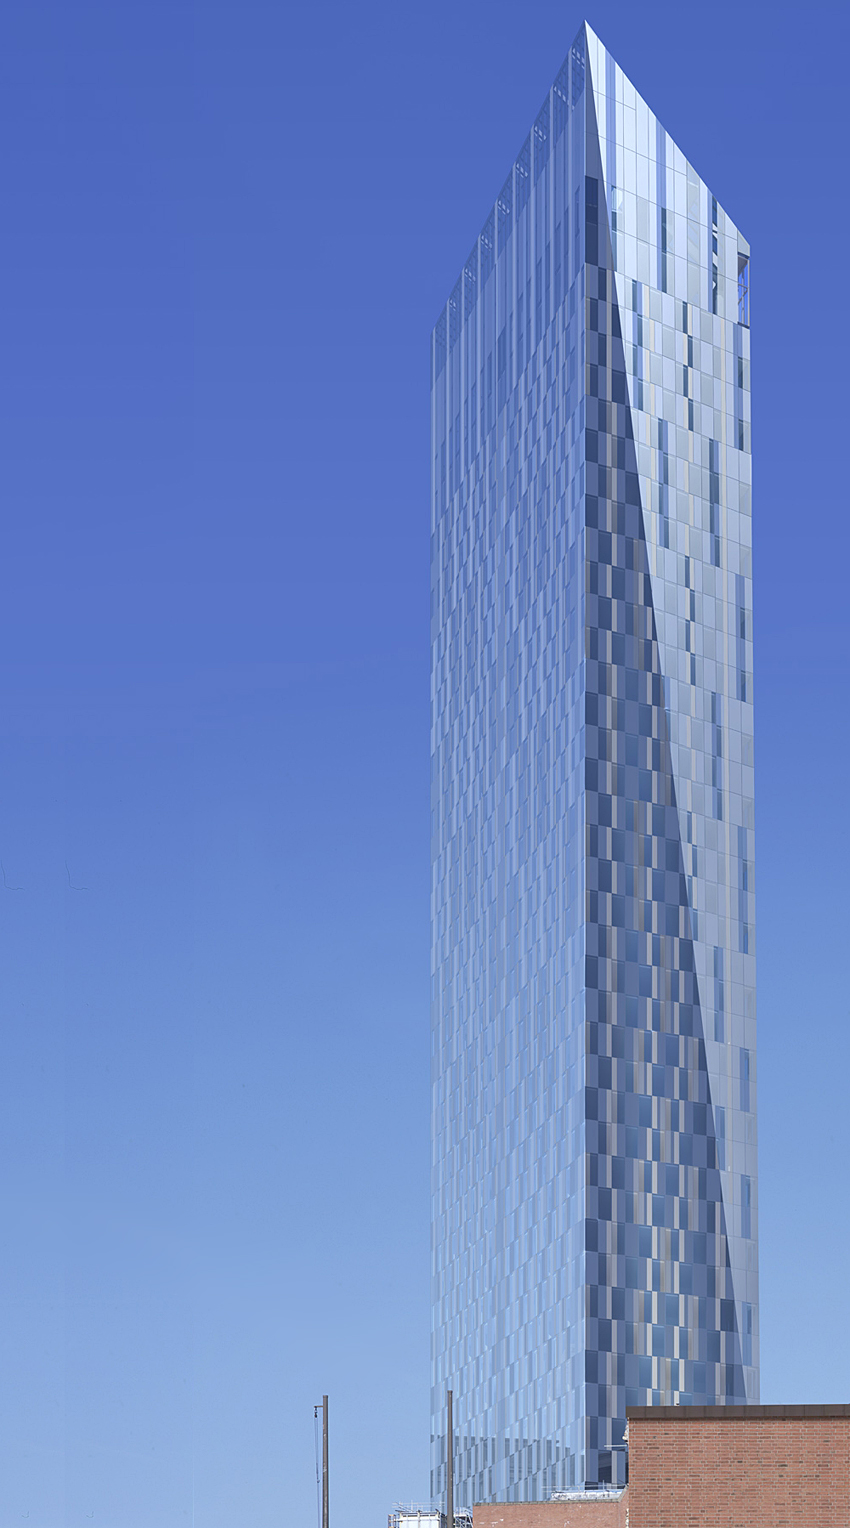 http://www.skyscrapernews.com/images/pics/3178LumiereTower1_pic1.jpg